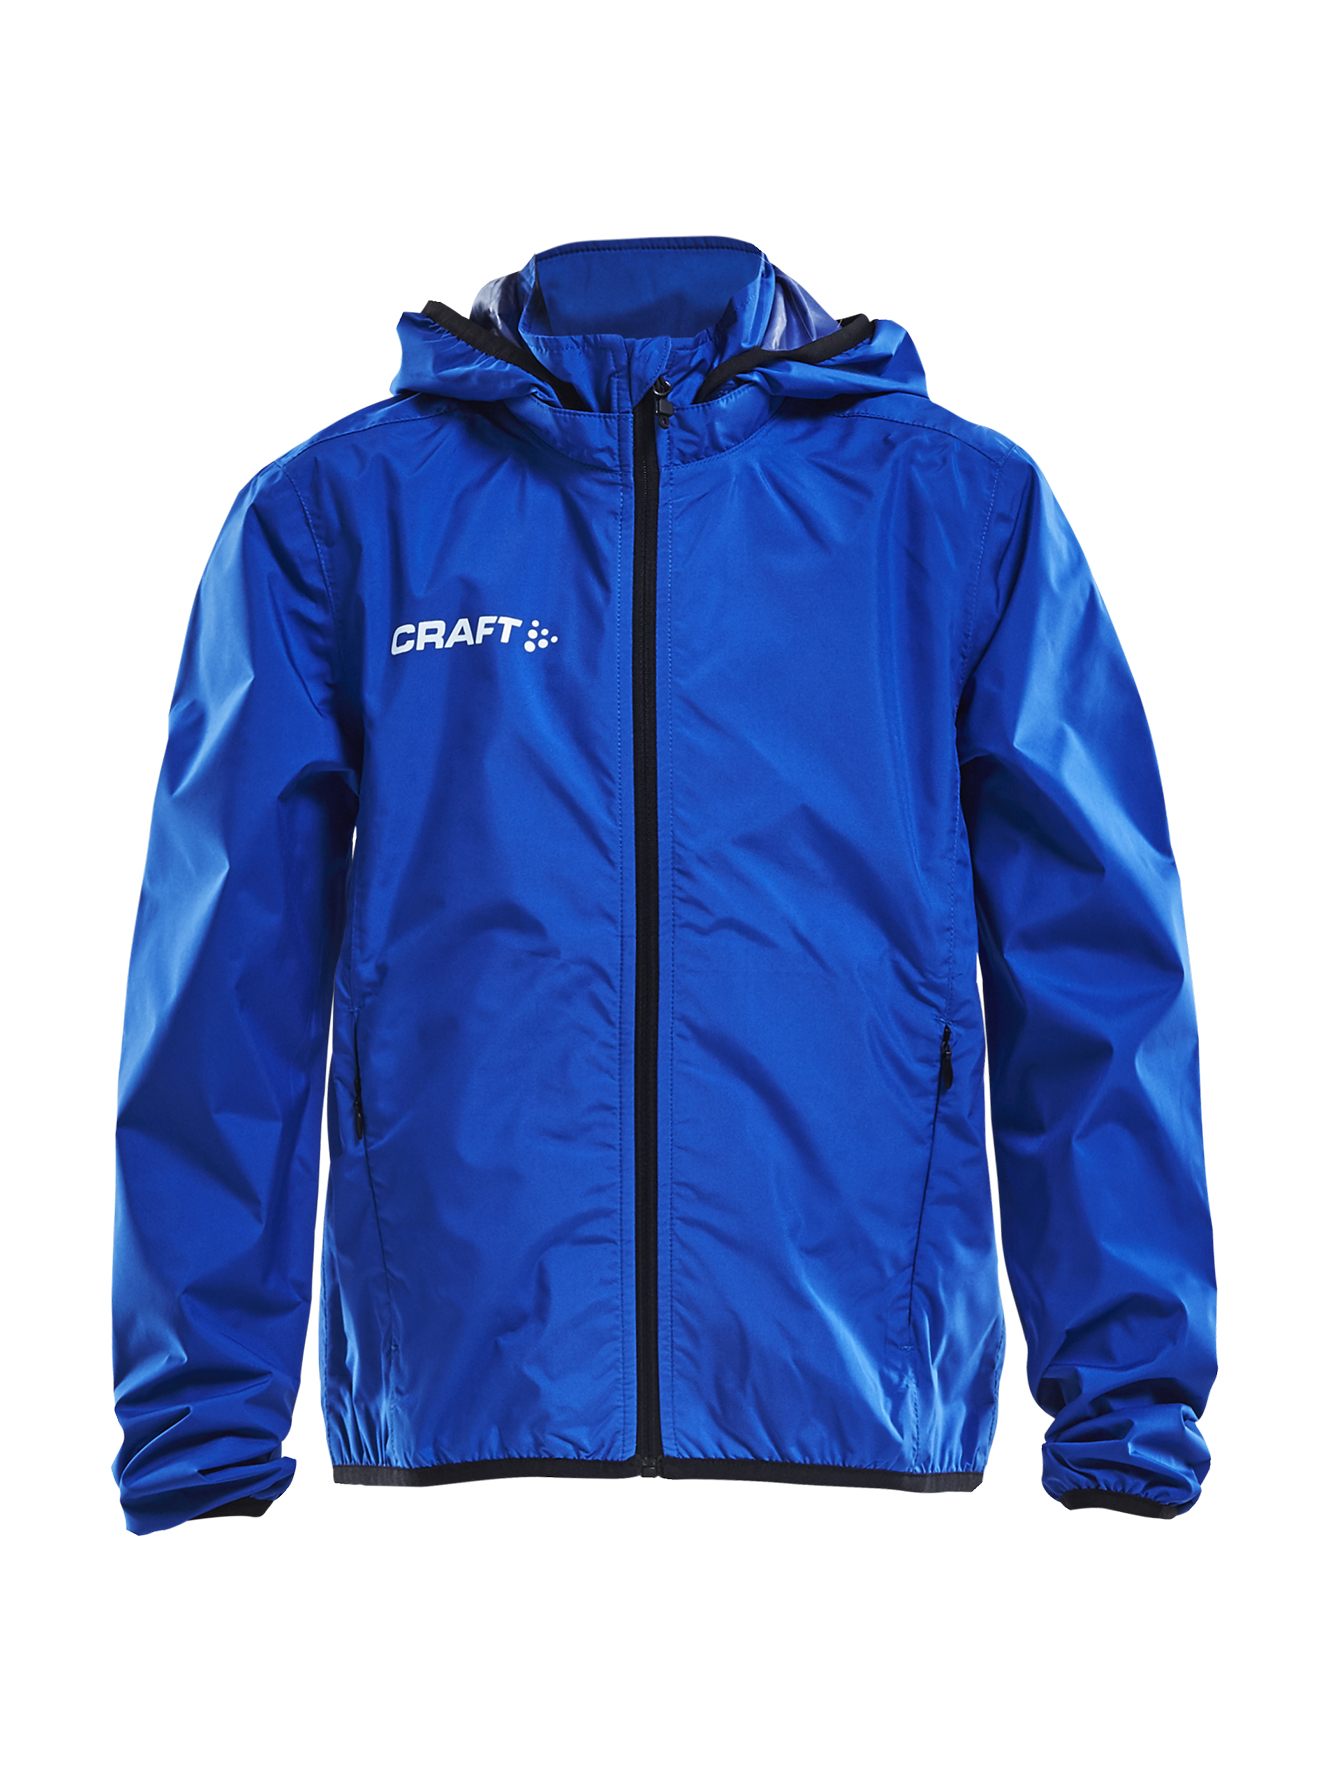 Craft Jacket Rain JR ROYAL BLUE/BLACK